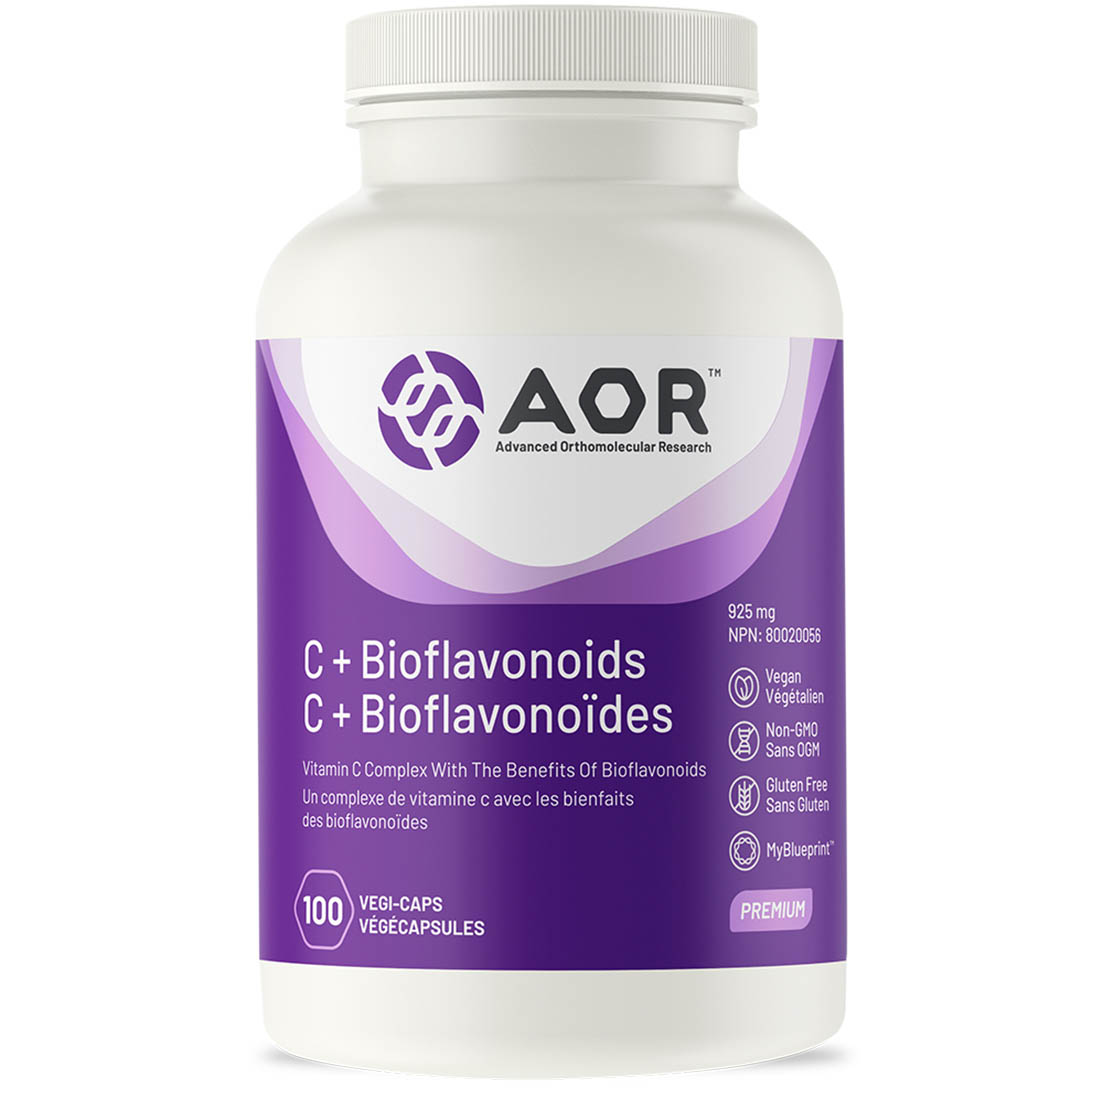 AOR C + Bioflavonoids Vitamin C Complex, 925mg